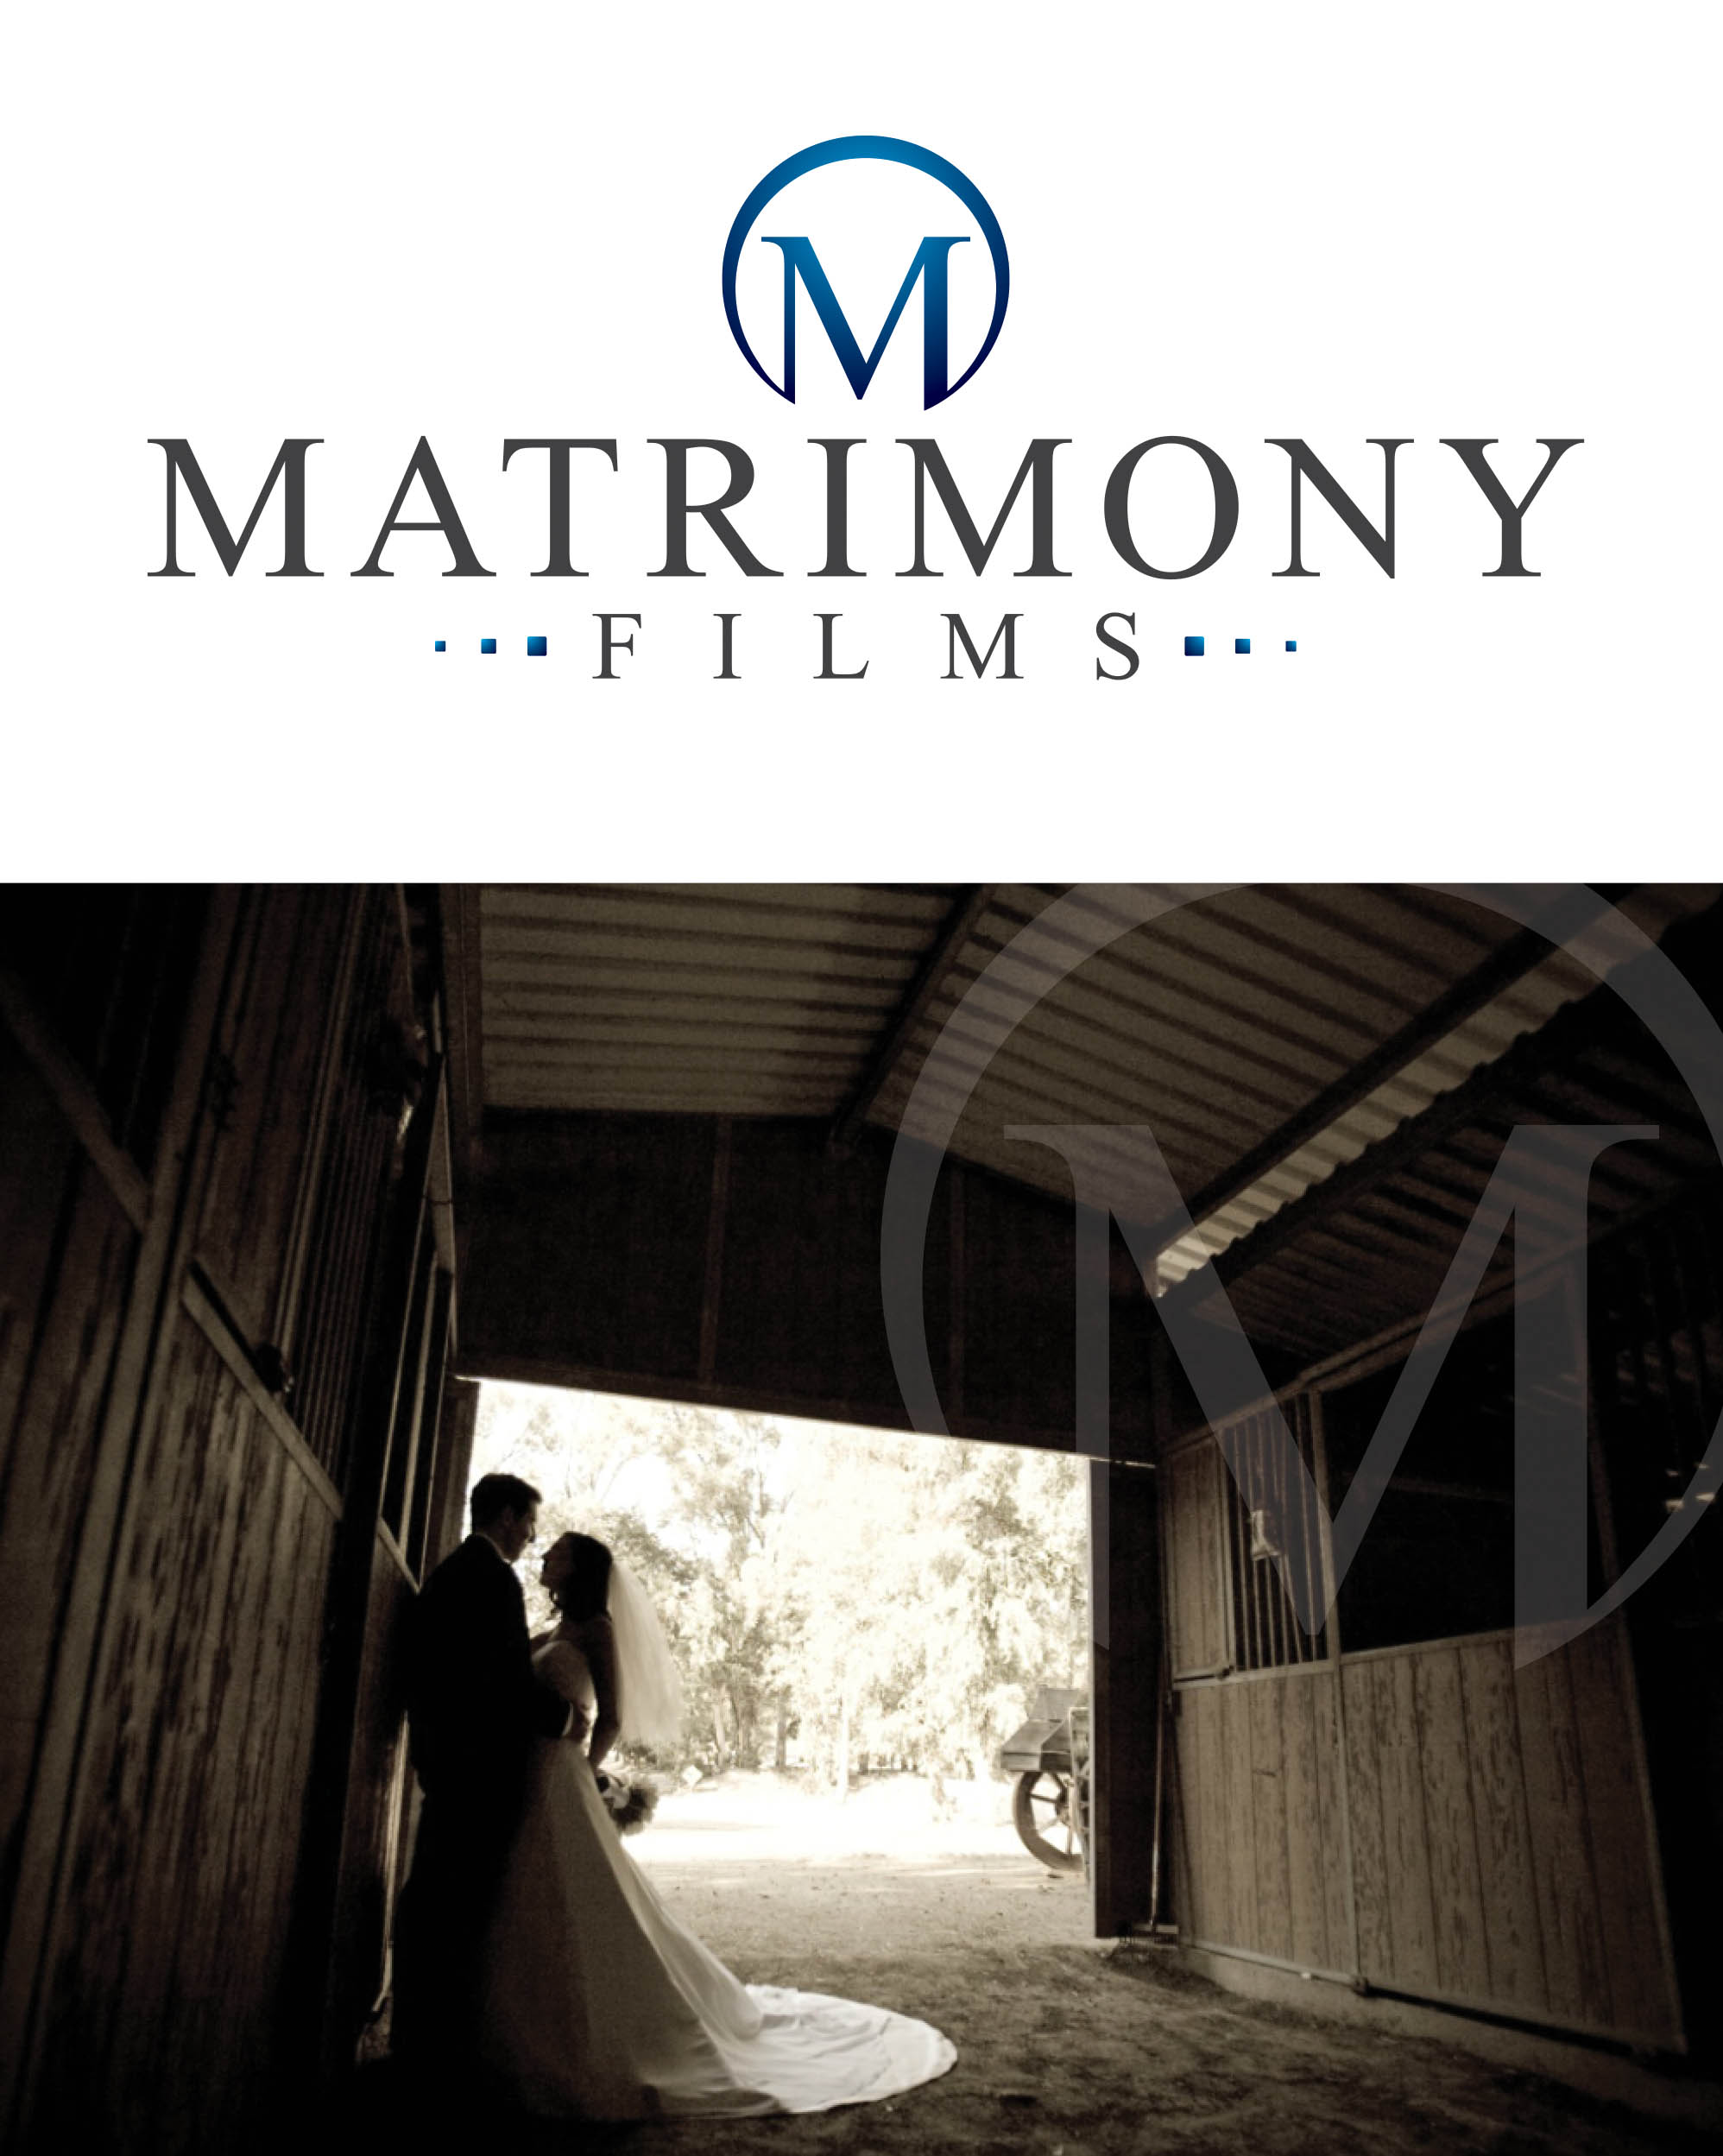 MATRIMONY logo